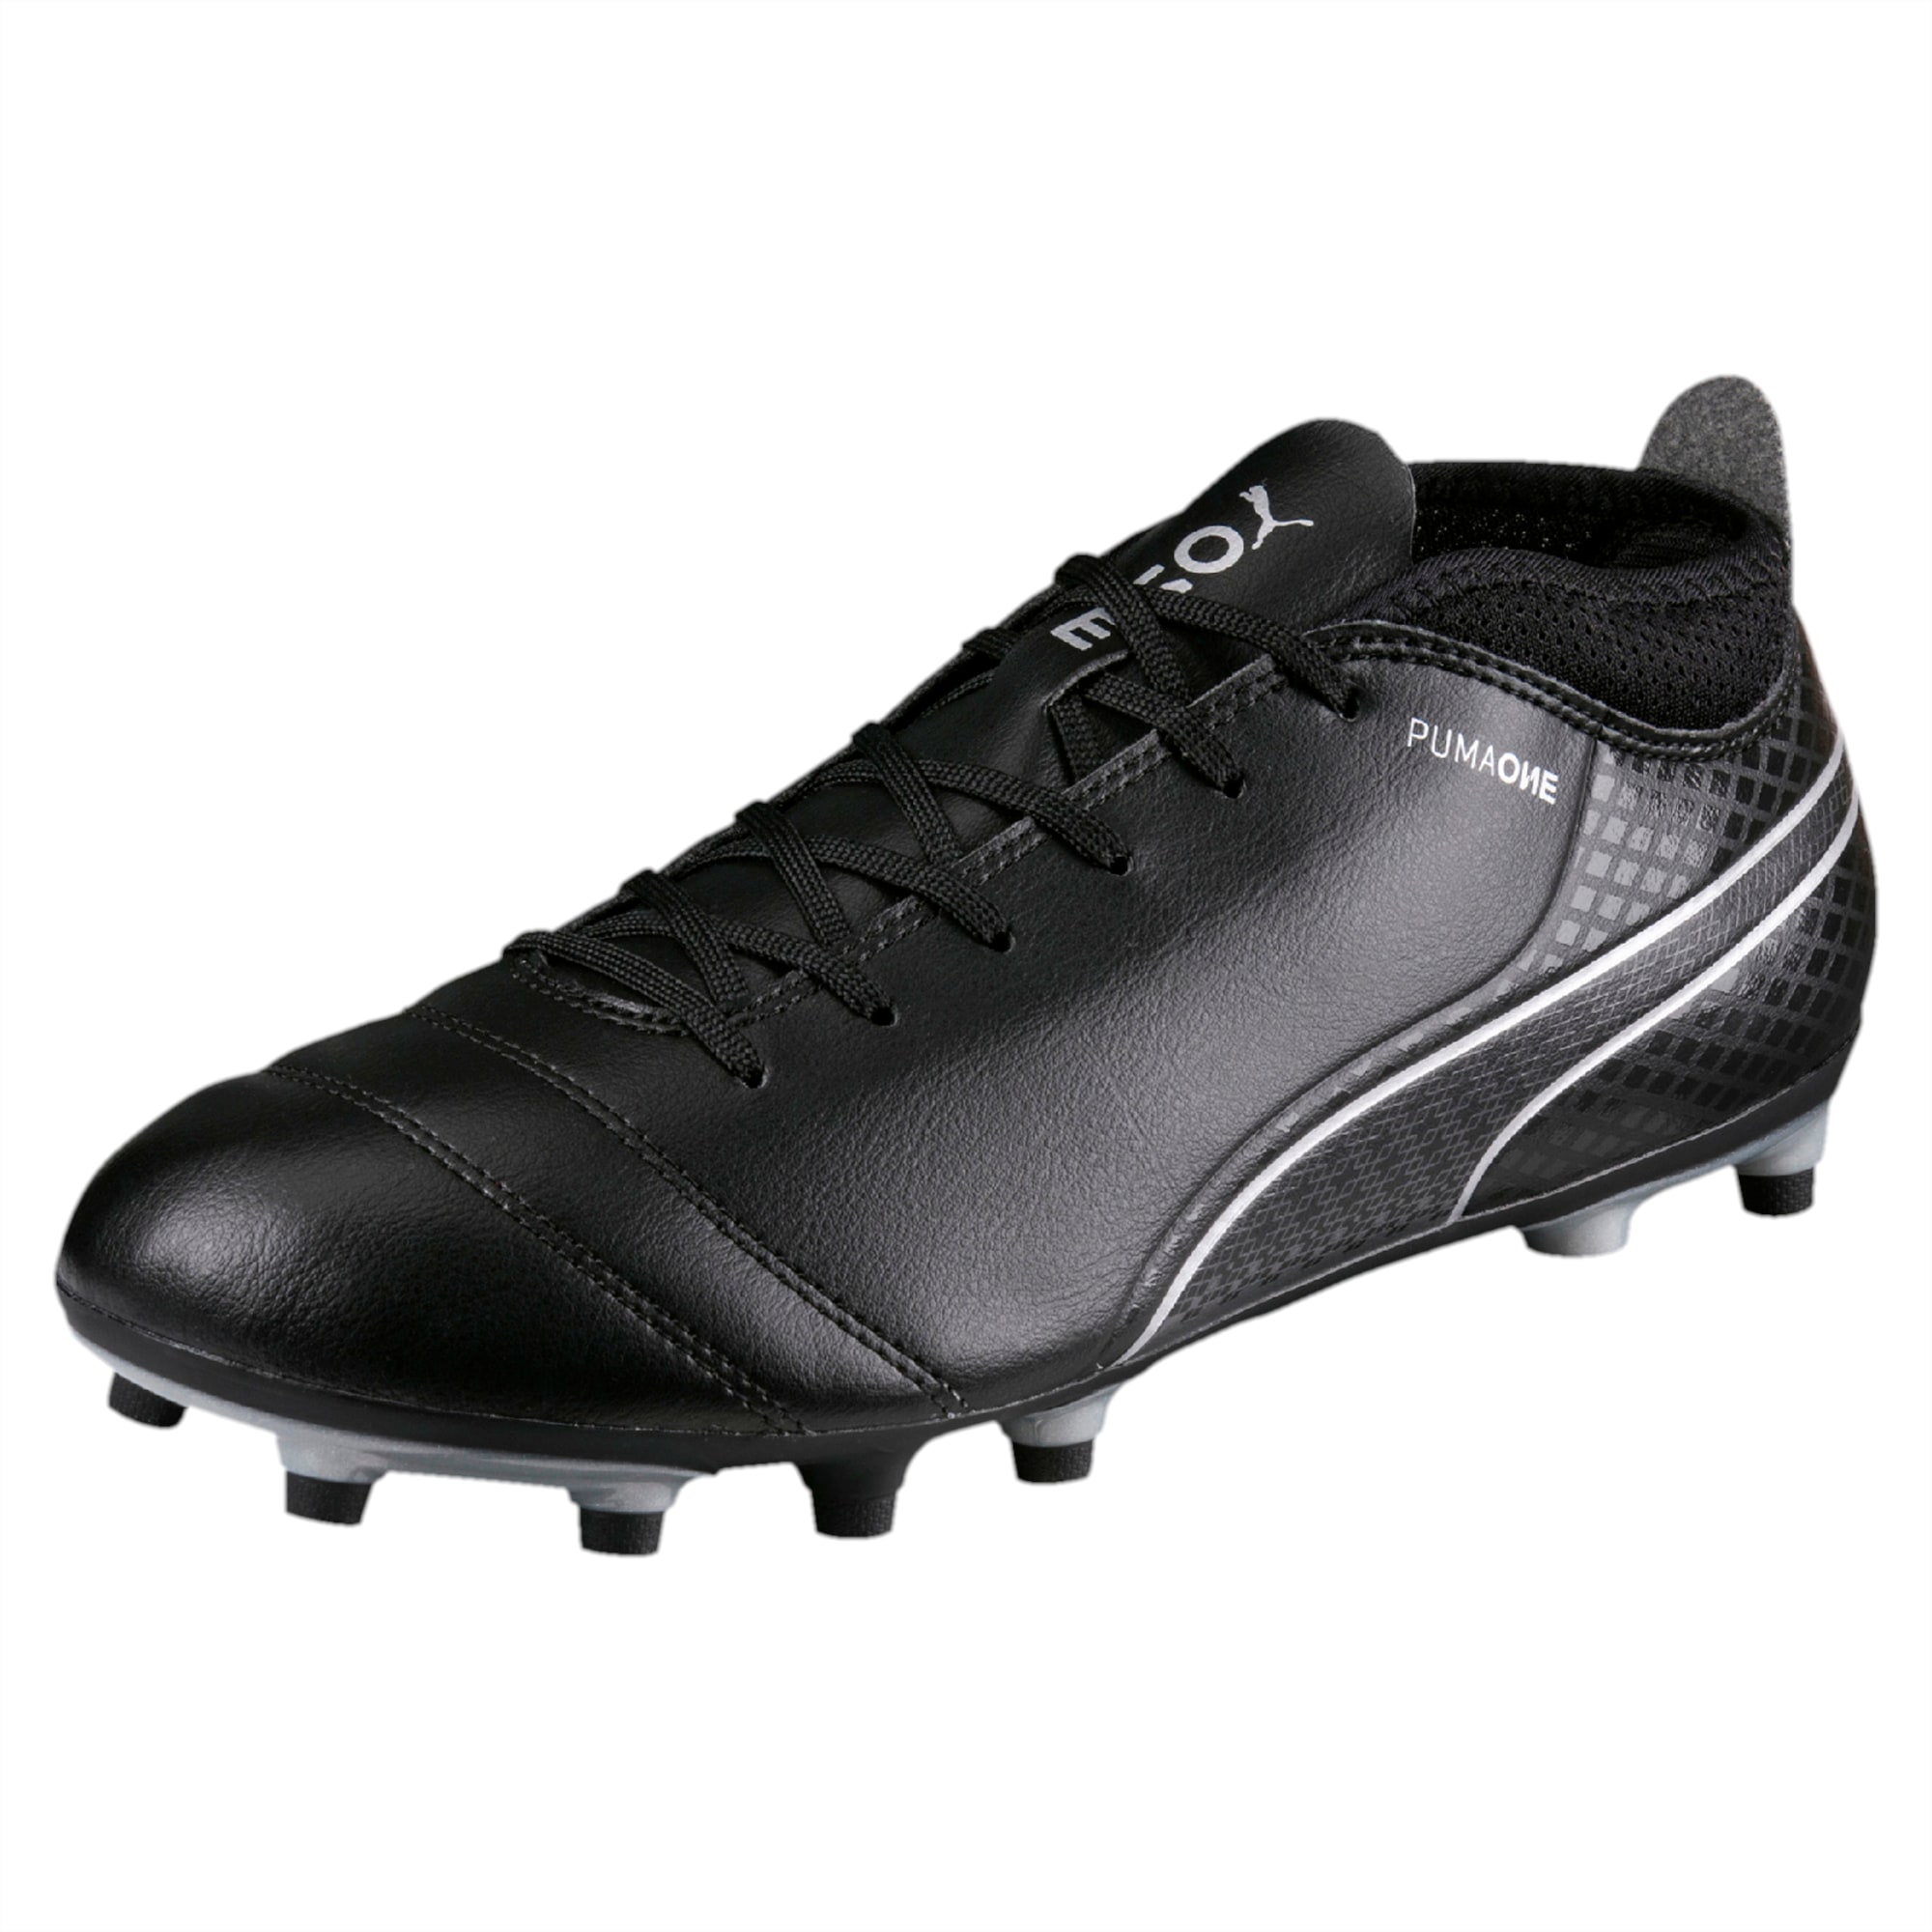 ONE 17.4 FG Men's Football Boots | Black-Black-Silver | PUMA Shoes | PUMA